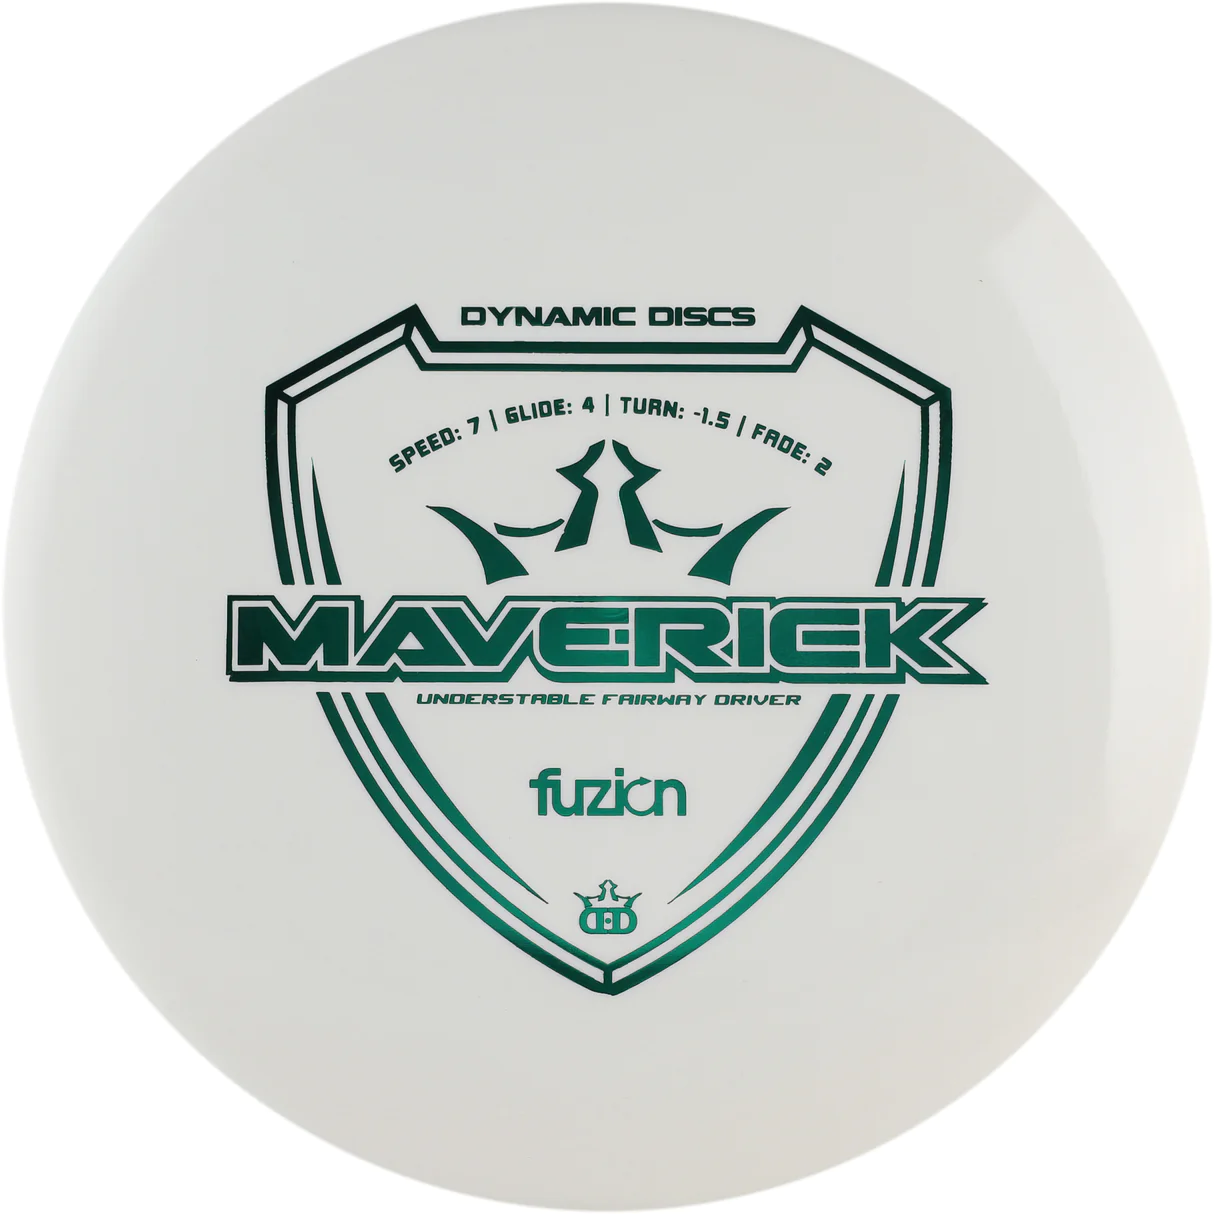 Dynamic Discs Disc Golf Fairway Driver Fuzion Line Maverick